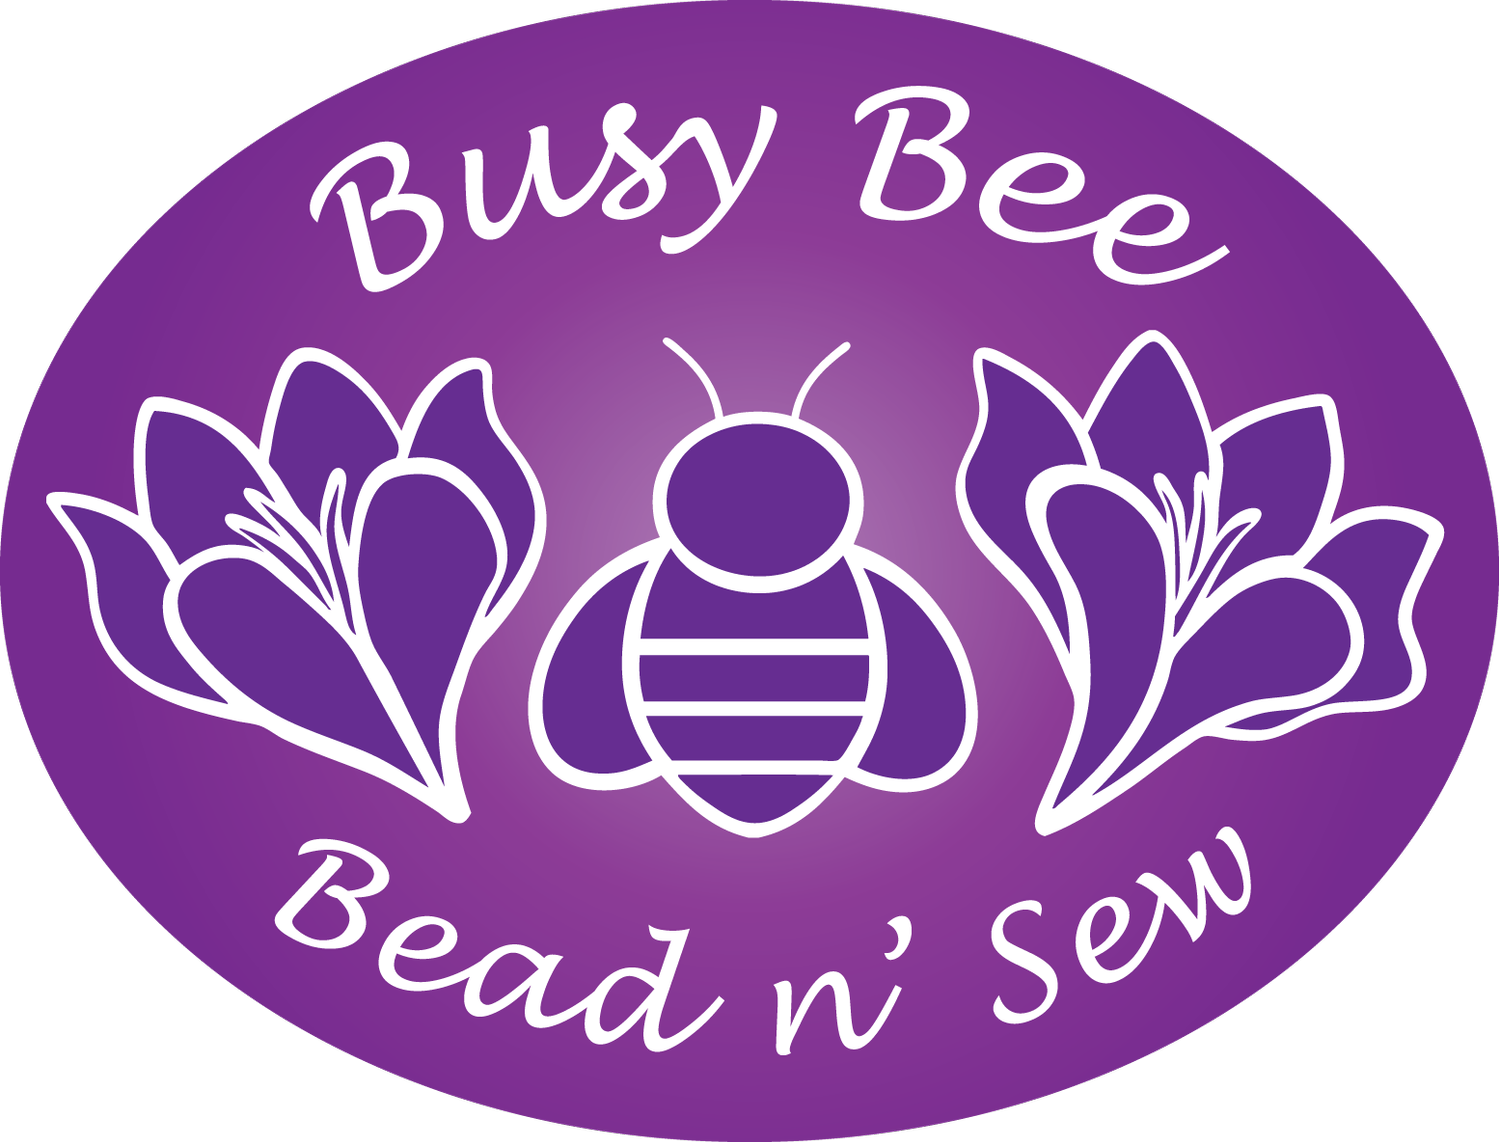 Busy Bee Bead n&#39; Sew